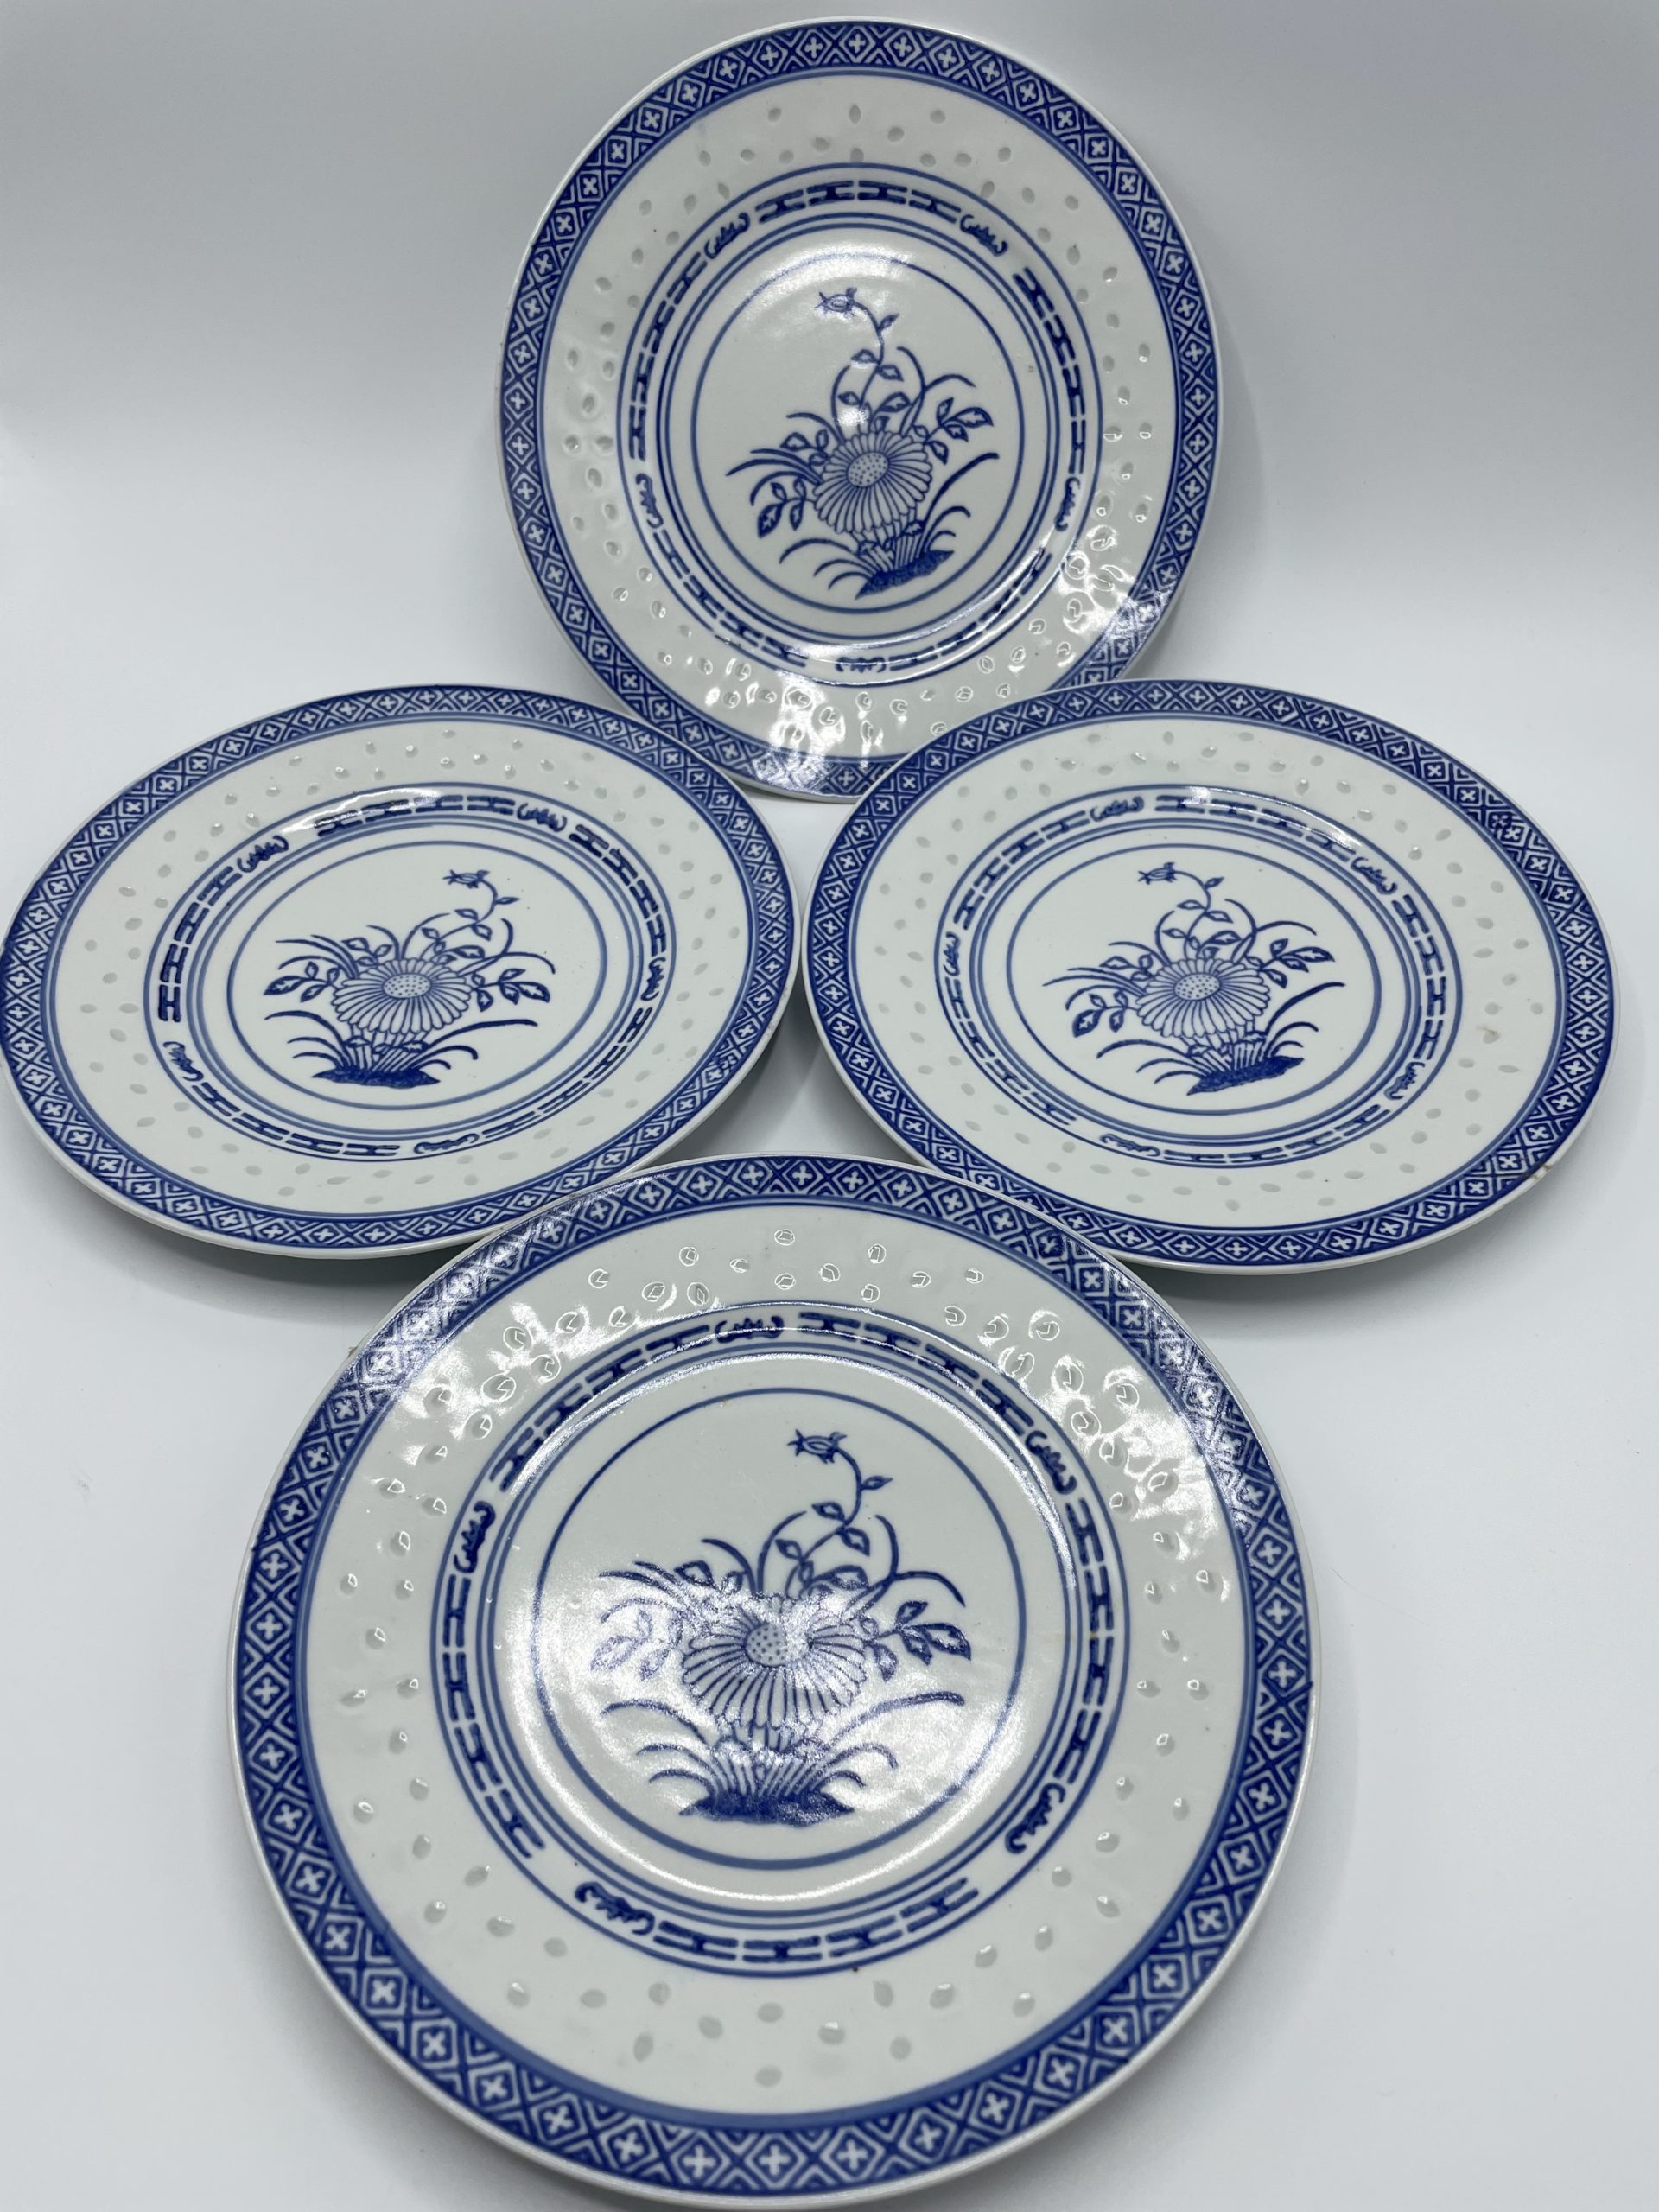 https://www.histoires-sans-fin.fr/wp-content/uploads/2021/10/assiette-plate-chinoise-grain-riz-bleu-blanc-3-scaled.jpg